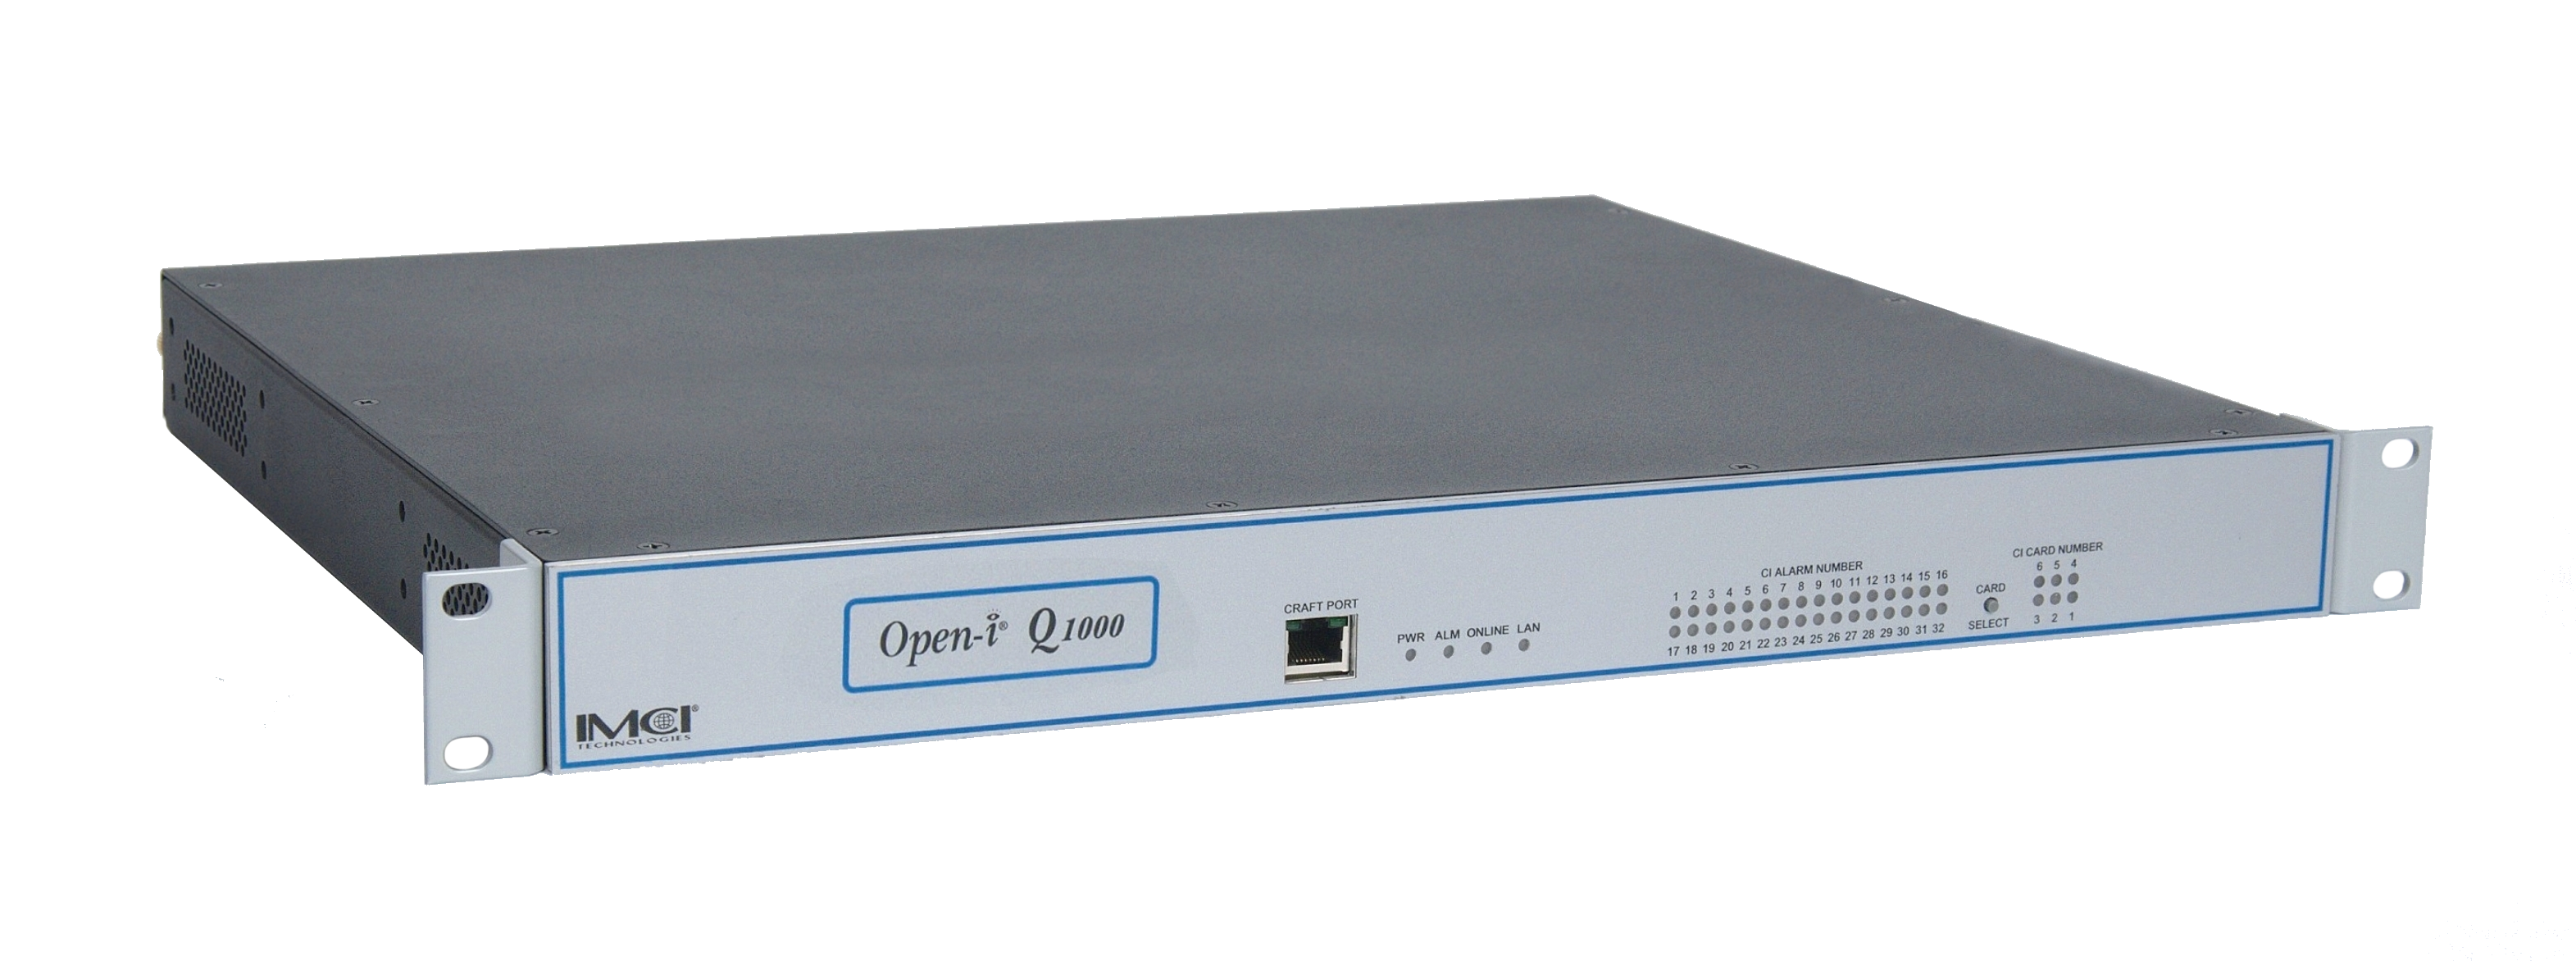 Open-i Q1000